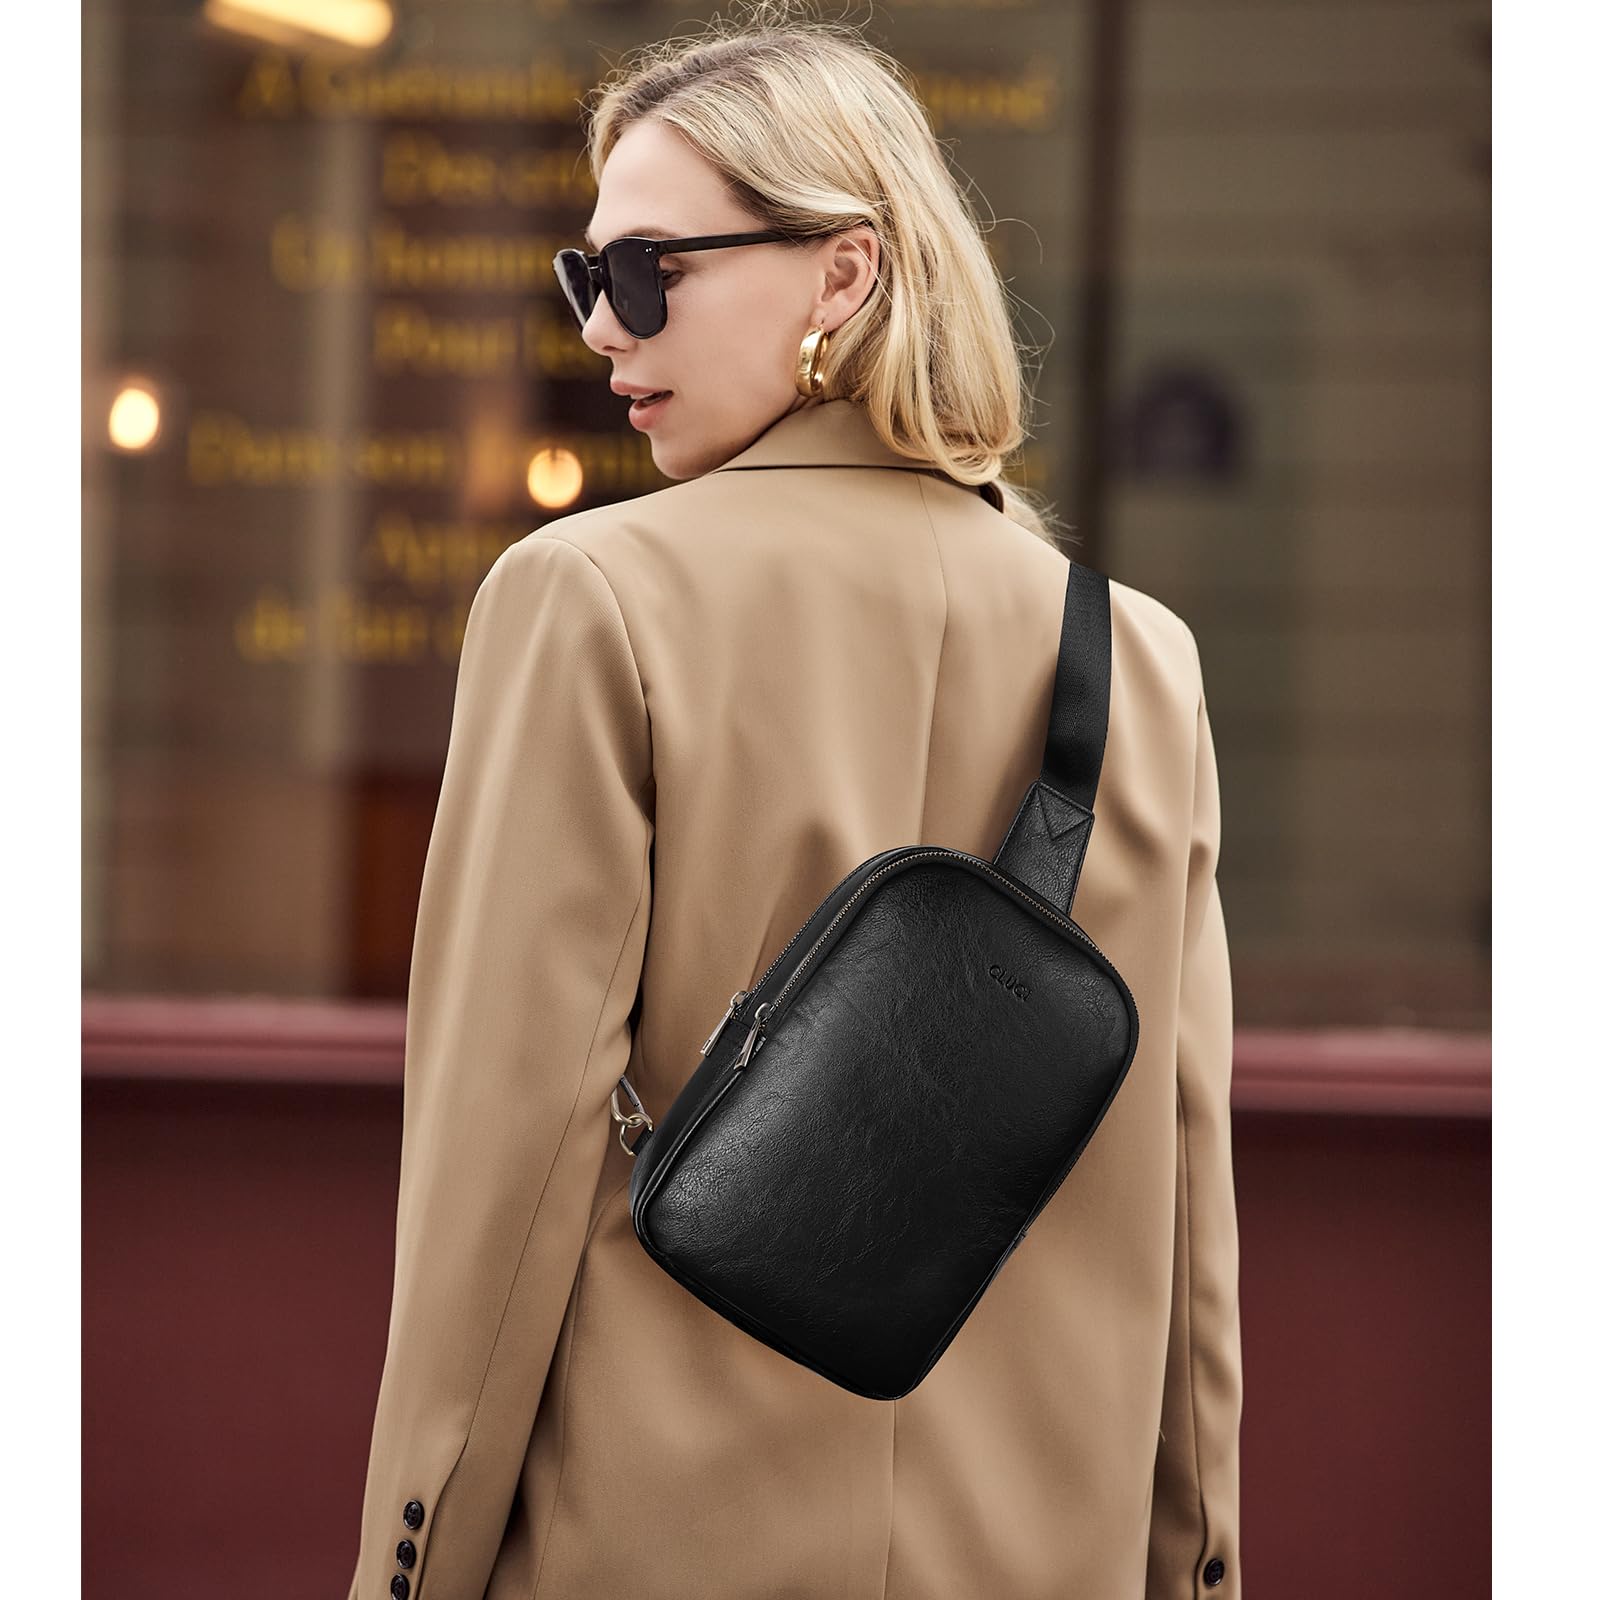 CLUCI Sling Bag for Women Crossbody Purse Large Leather Cross Body Bag Women Sling Backpack for Travel Trendy